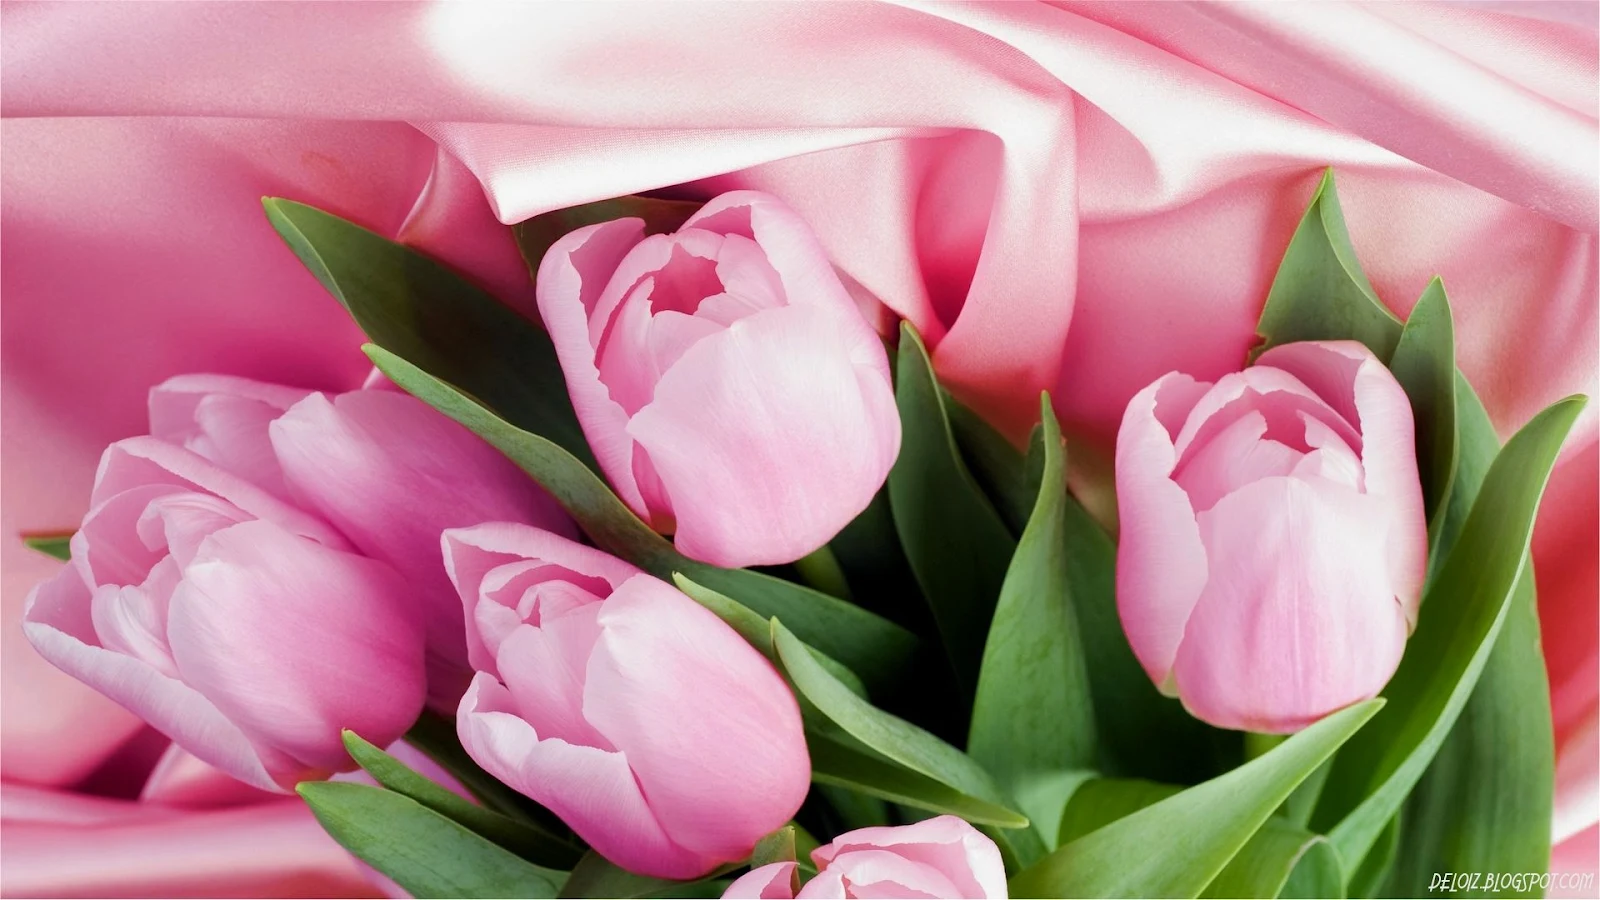 eleletsitz: Tulip Putih Wallpaper Images